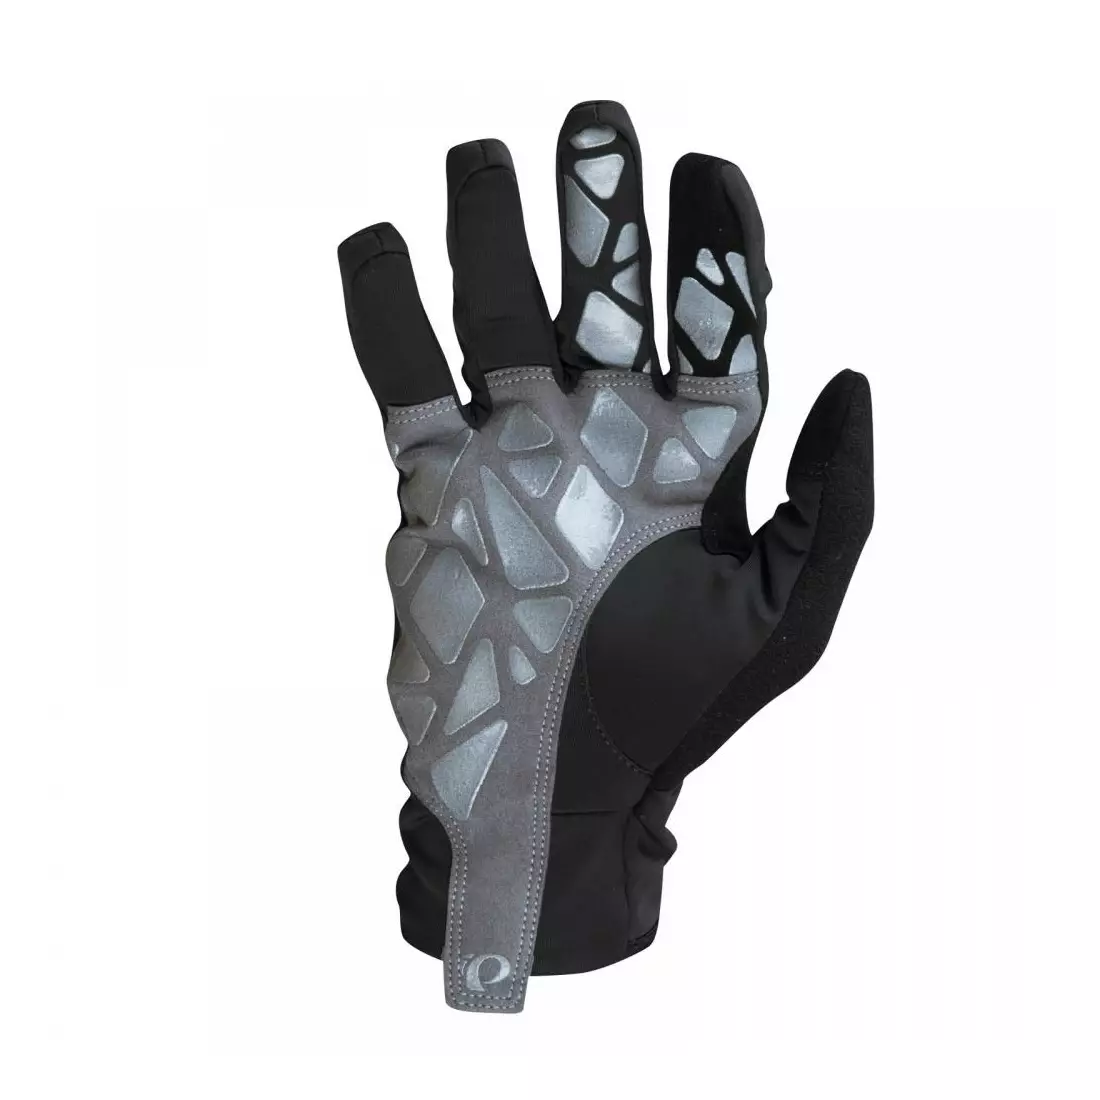 PEARL IZUMI Select Softshell Lite 14141409-021 - pánske športové rukavice